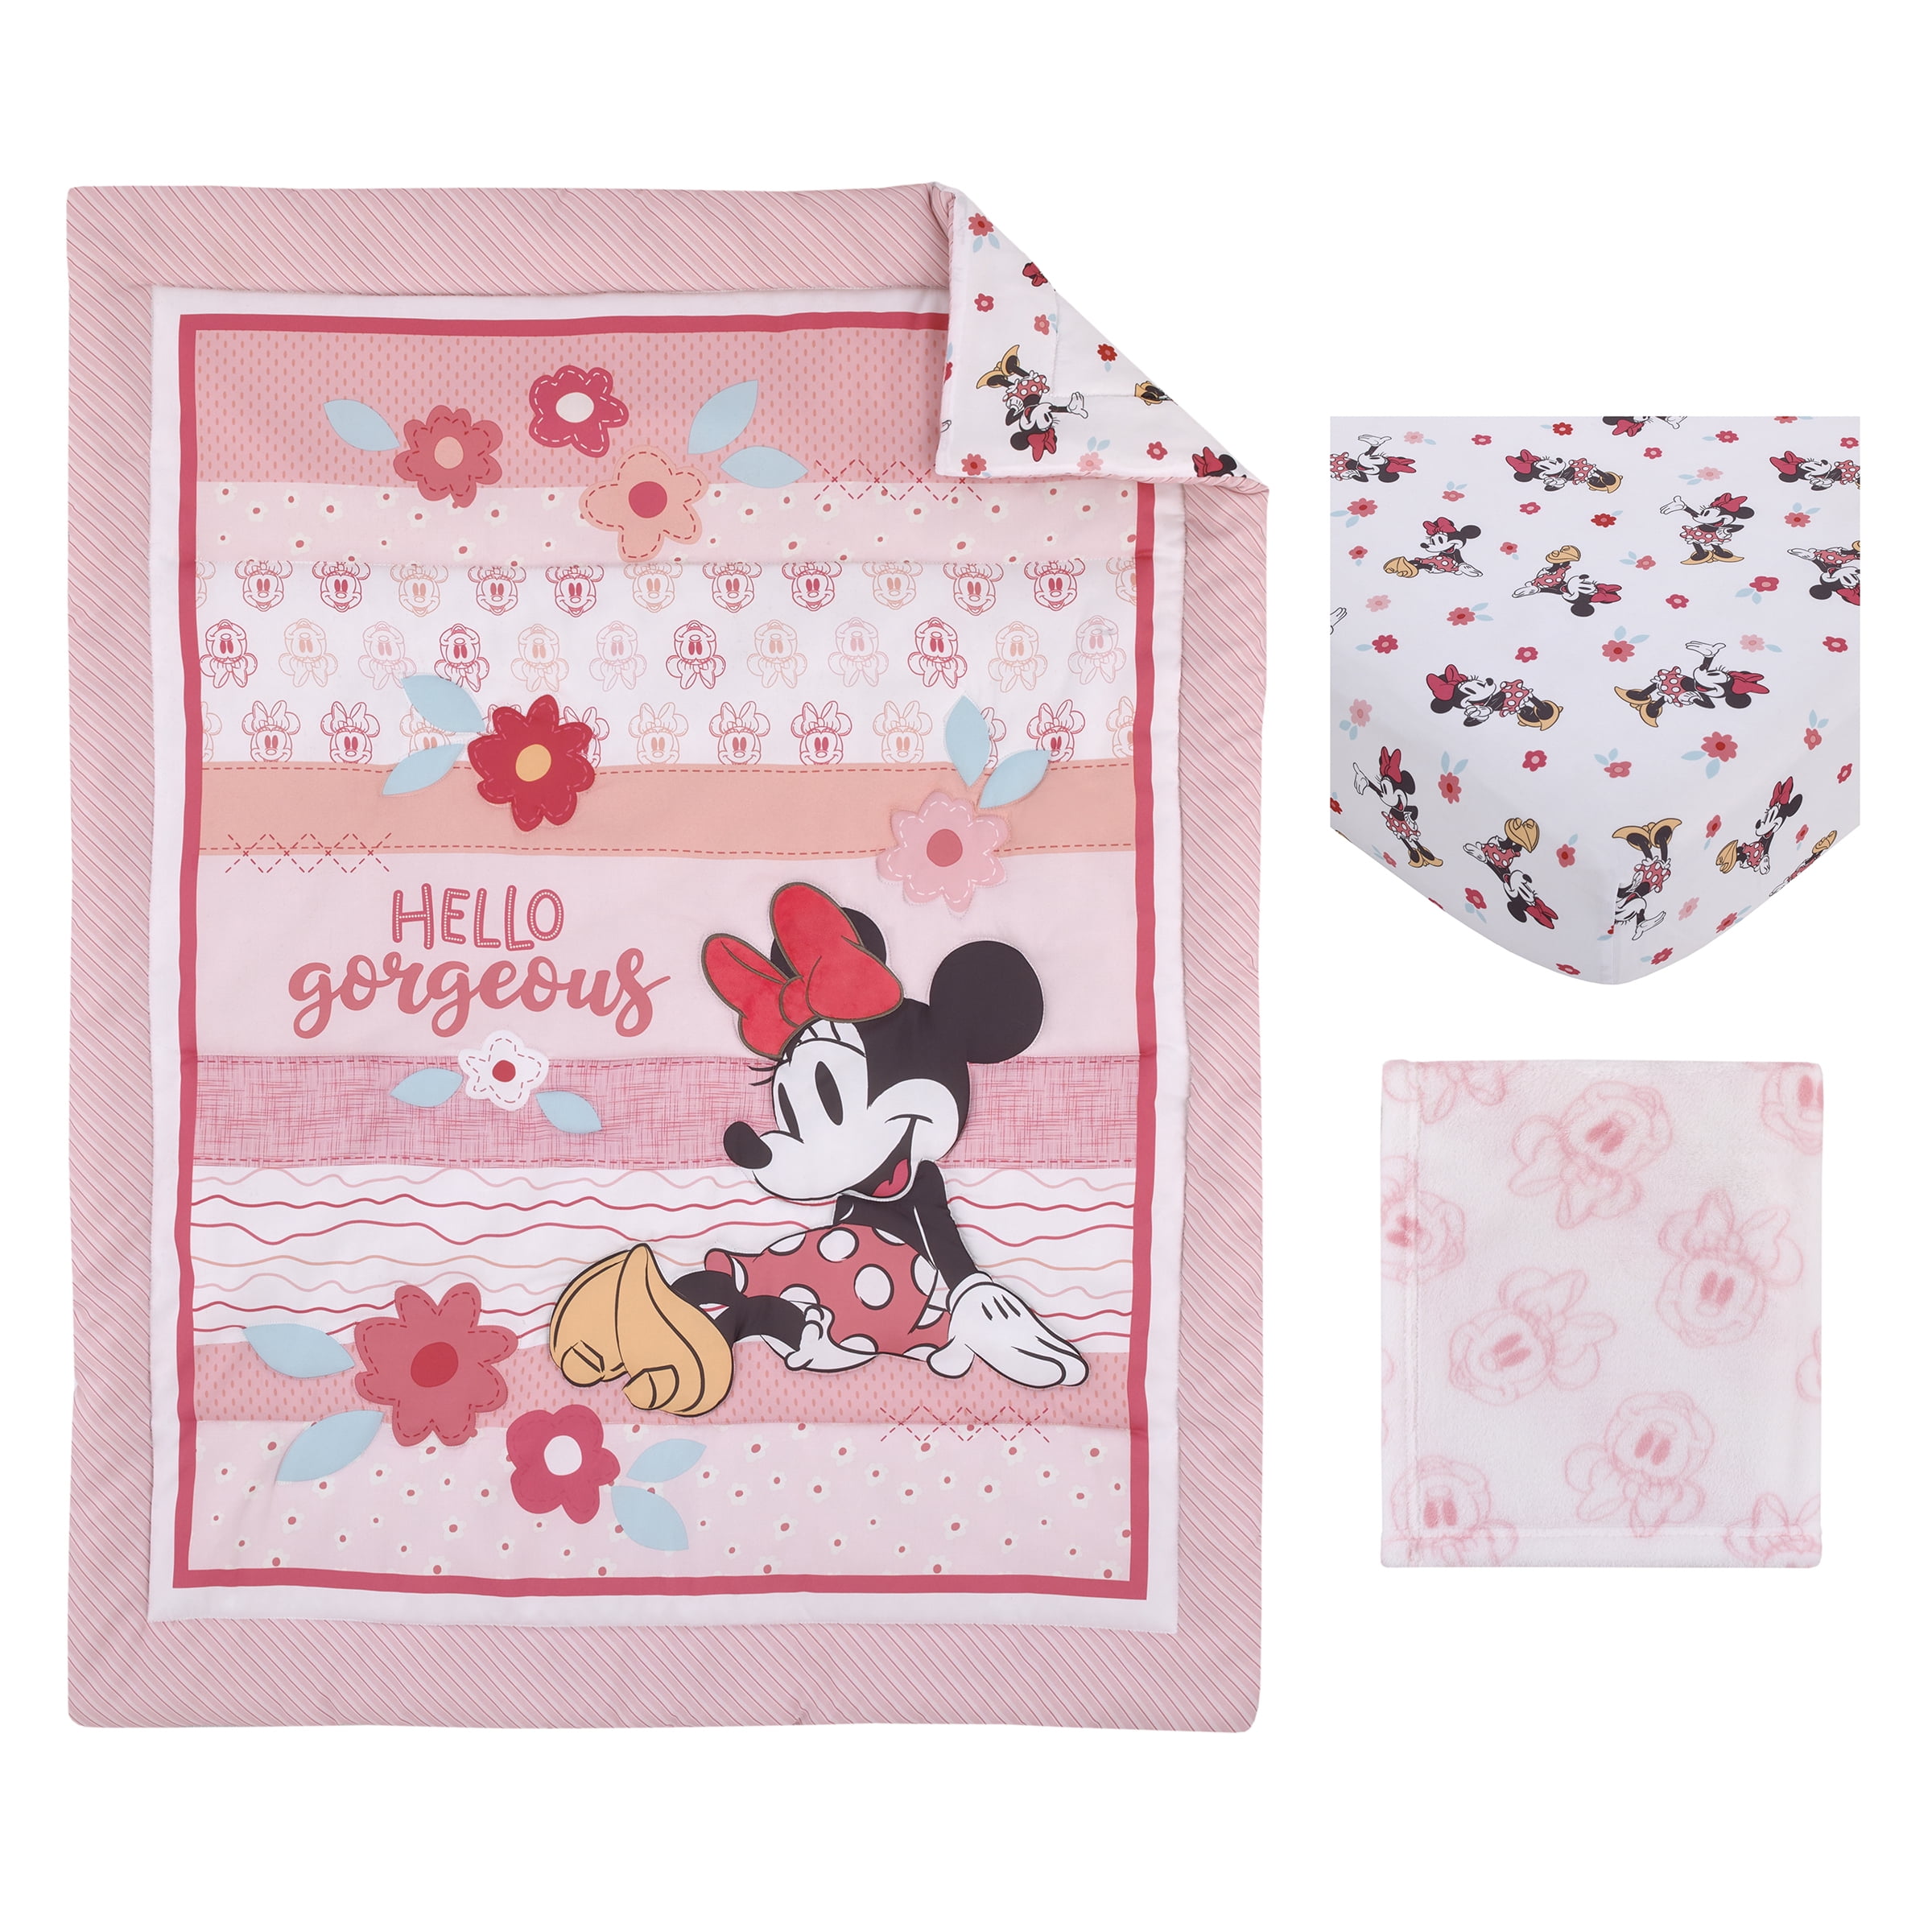 Disney Minnie Hello Gorgeous 3-Piece Crib Bedding Set, Pink Floral, Comforter, Sheet, Blanket, Polyfill comforter